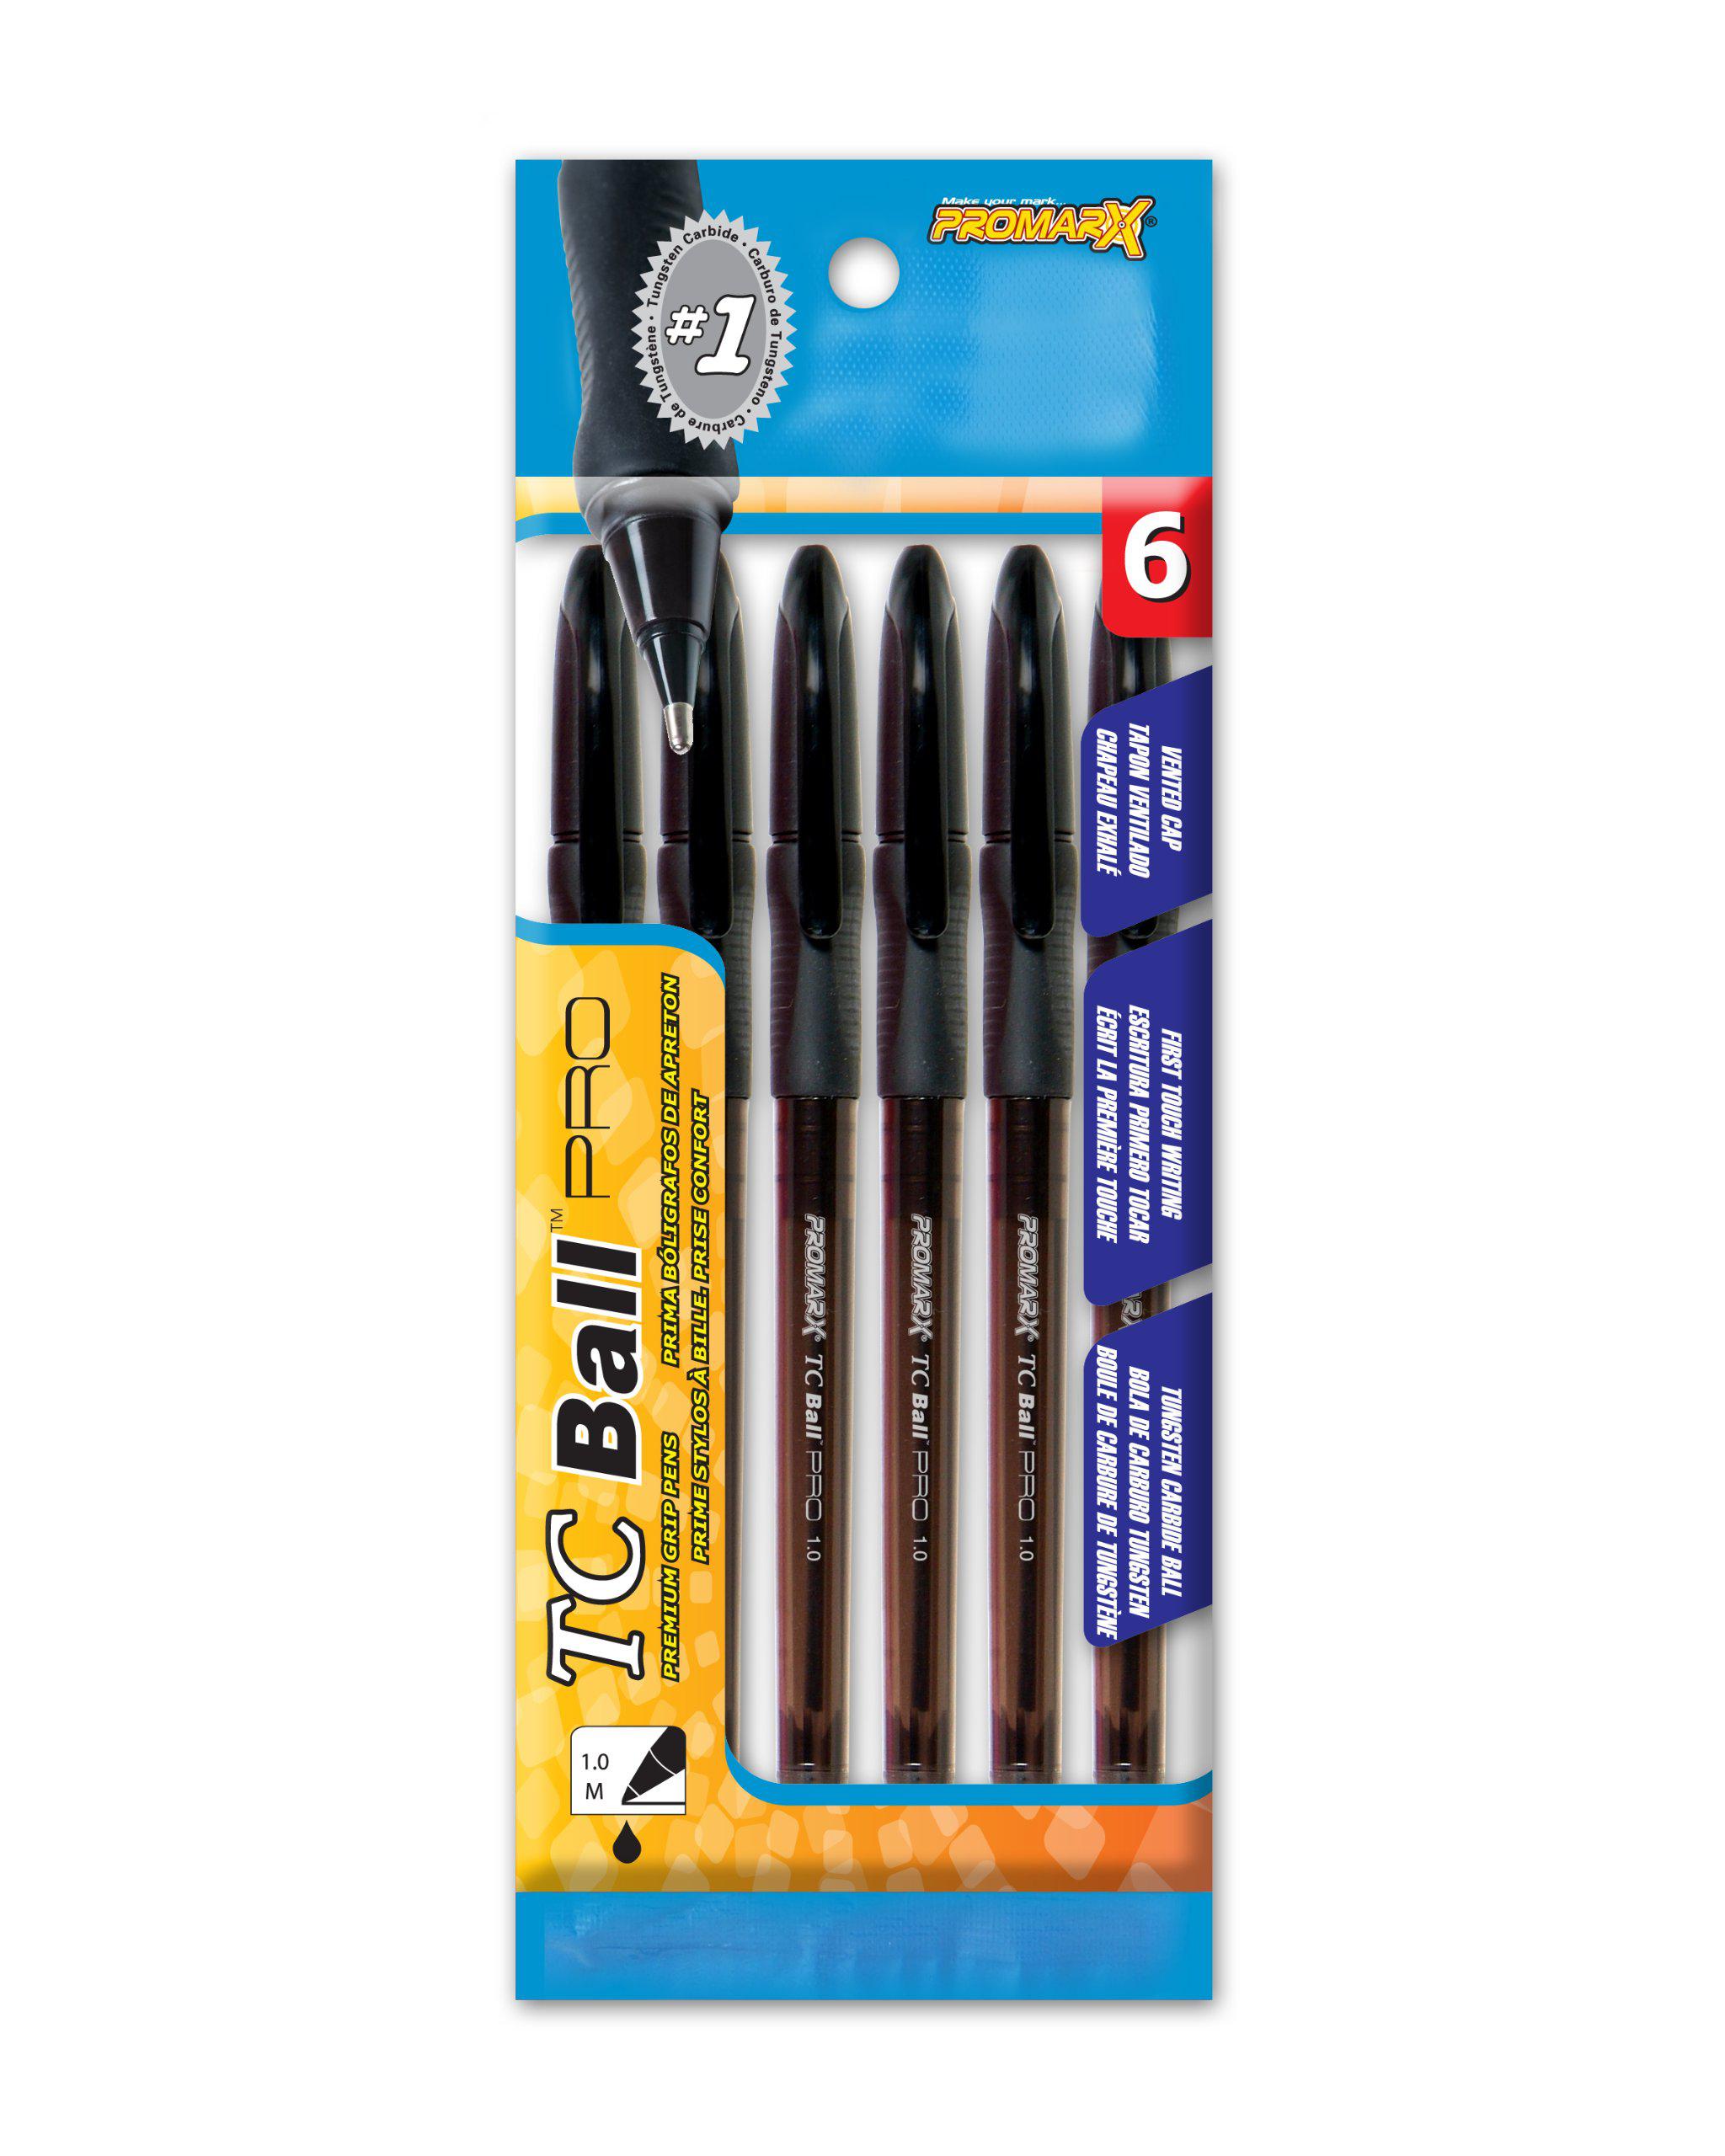 kittrich corporation promarx tc ball pro grip stick pen, 1.0 mm, black ink, 6-count (bp64-kf1p06-48)